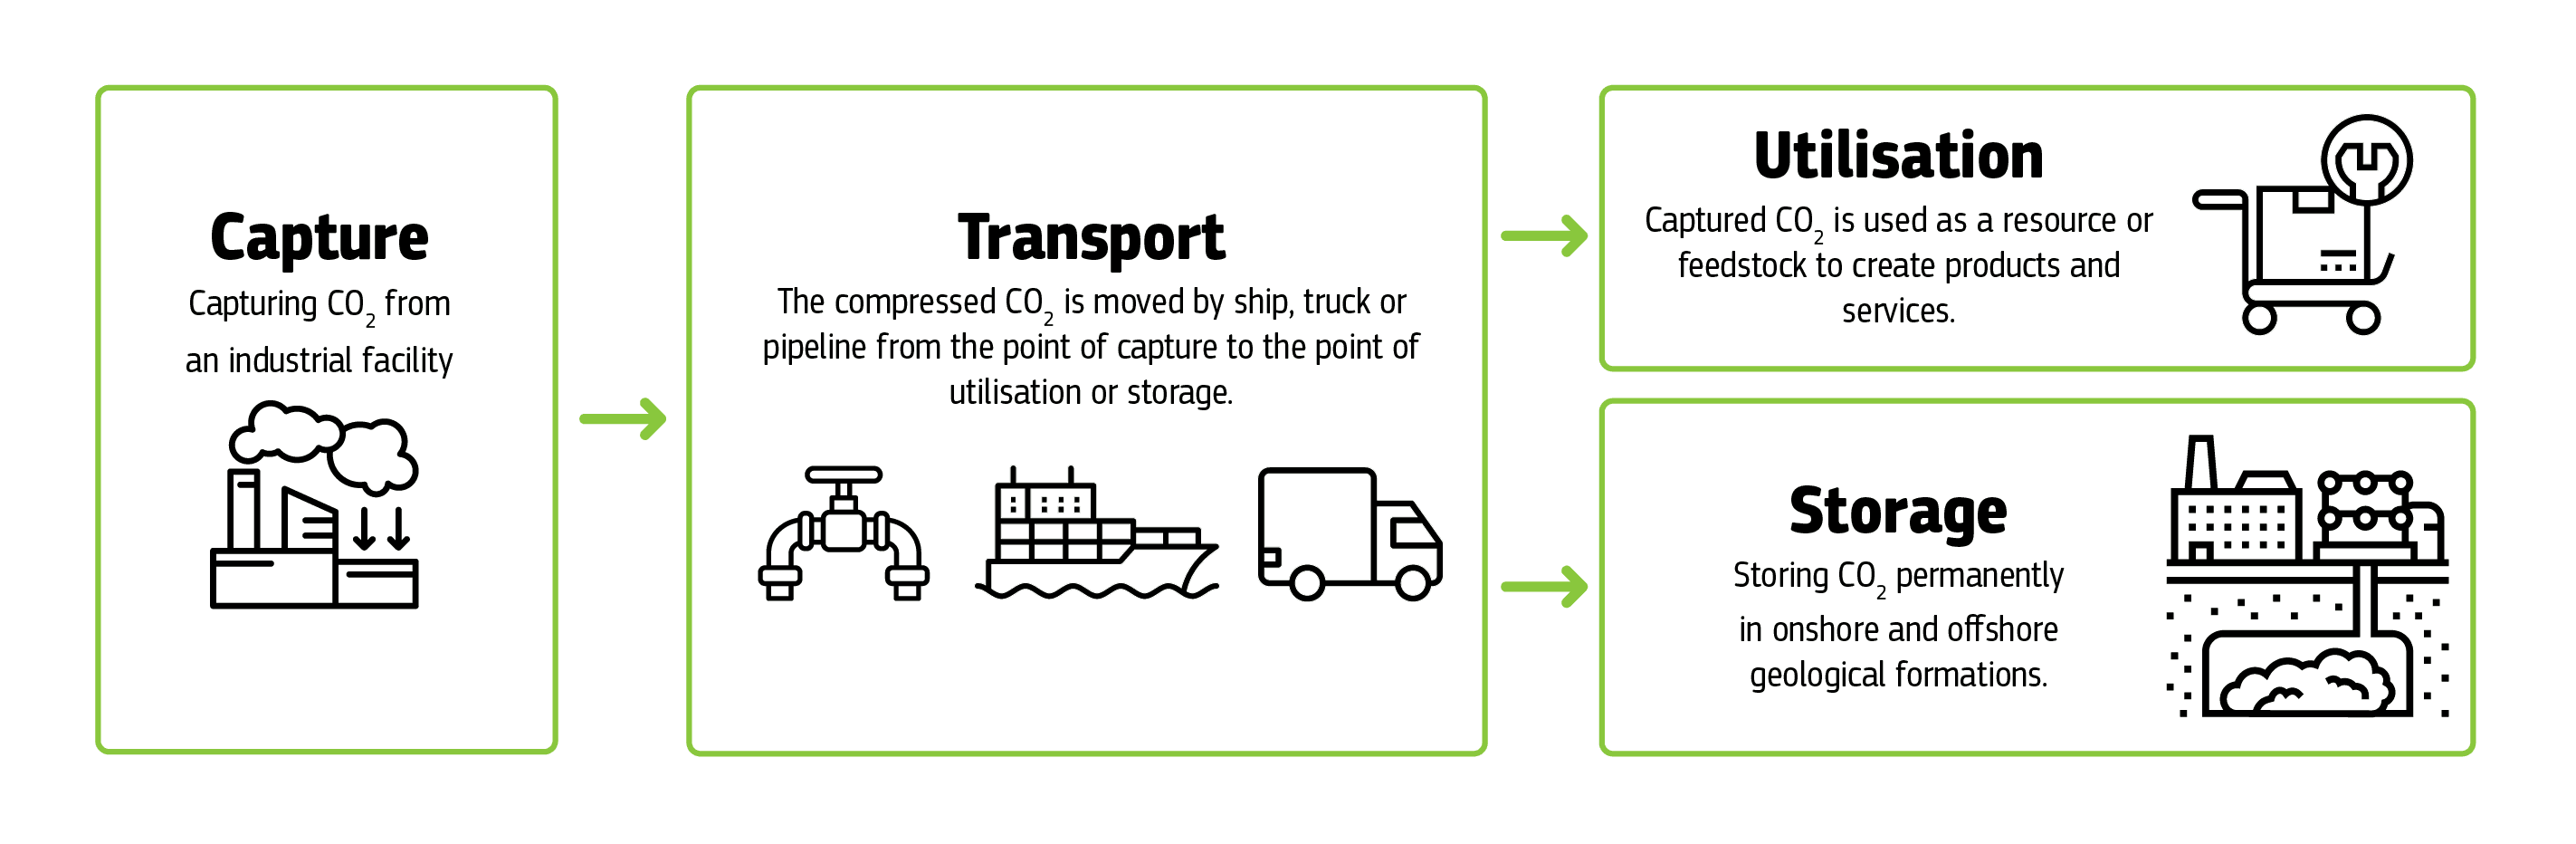 The image shows a process flow diagram of Carbon Capture, Utilization and Storage (CCUS) technology.